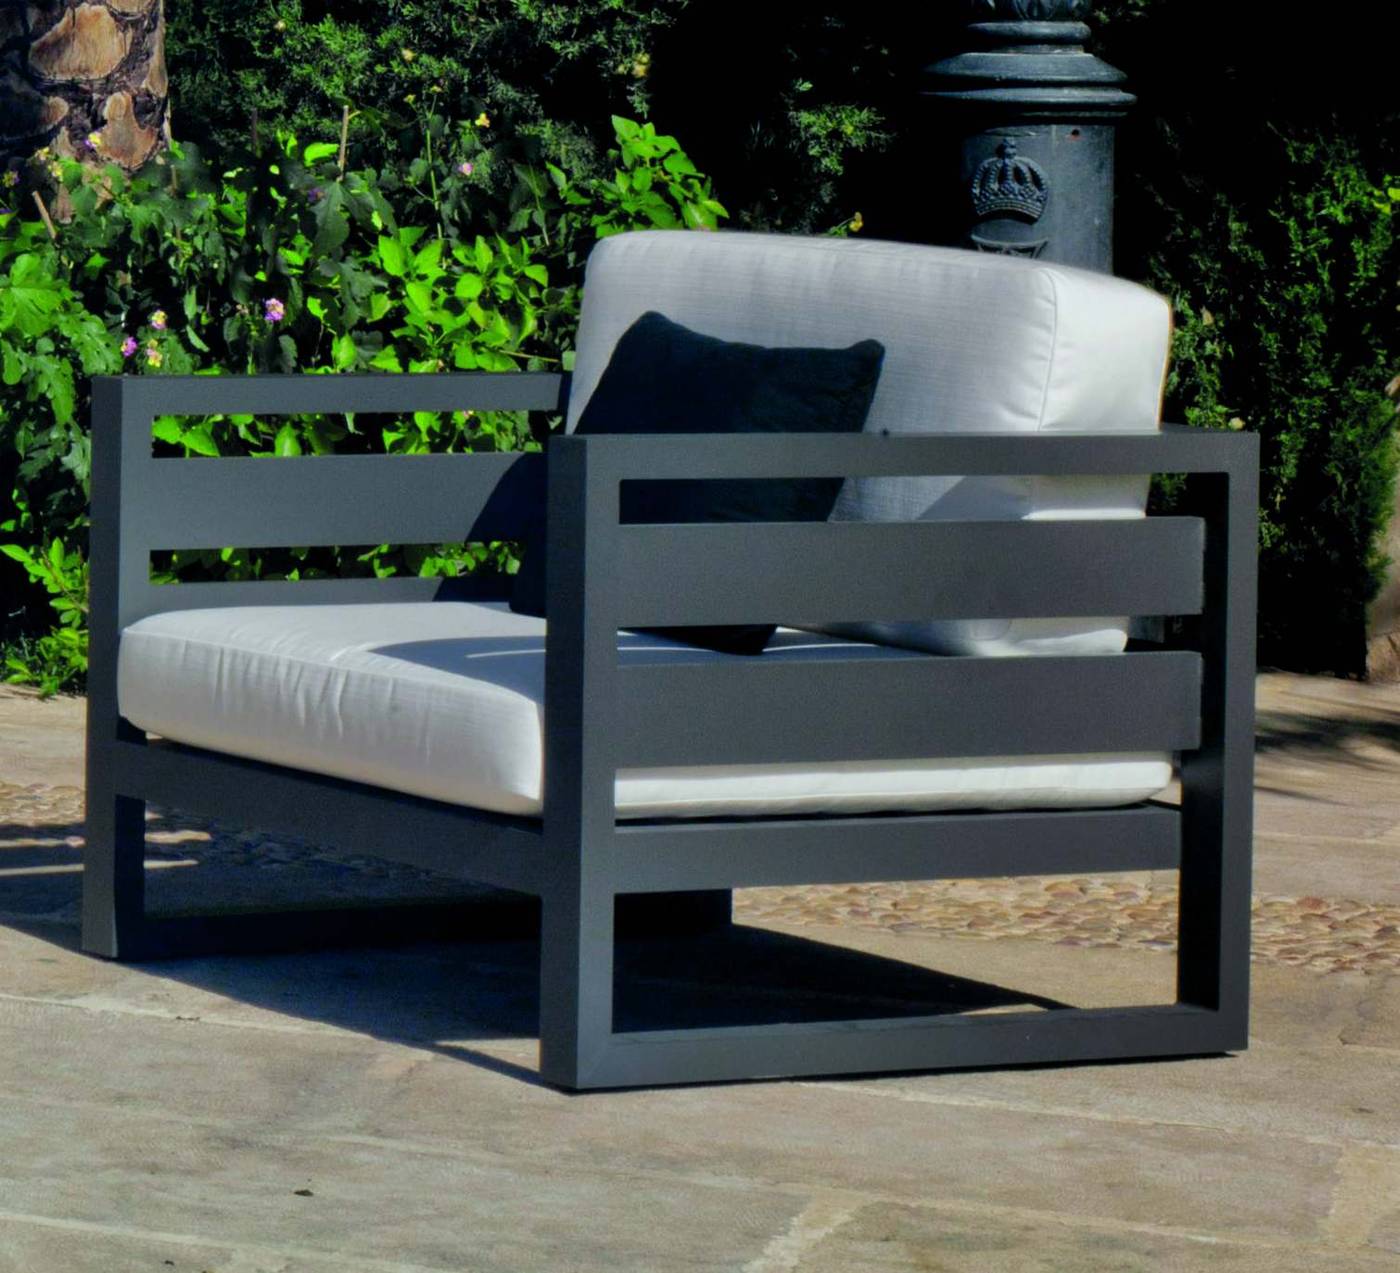 Set Aluminio Luxe Cosmos-7 - Conjunto lujo de aluminio color blanco, antracita, champagne, plata o marrón: 1 sofá de 2 plazas + 2 sillones + 1 mesa de centro.